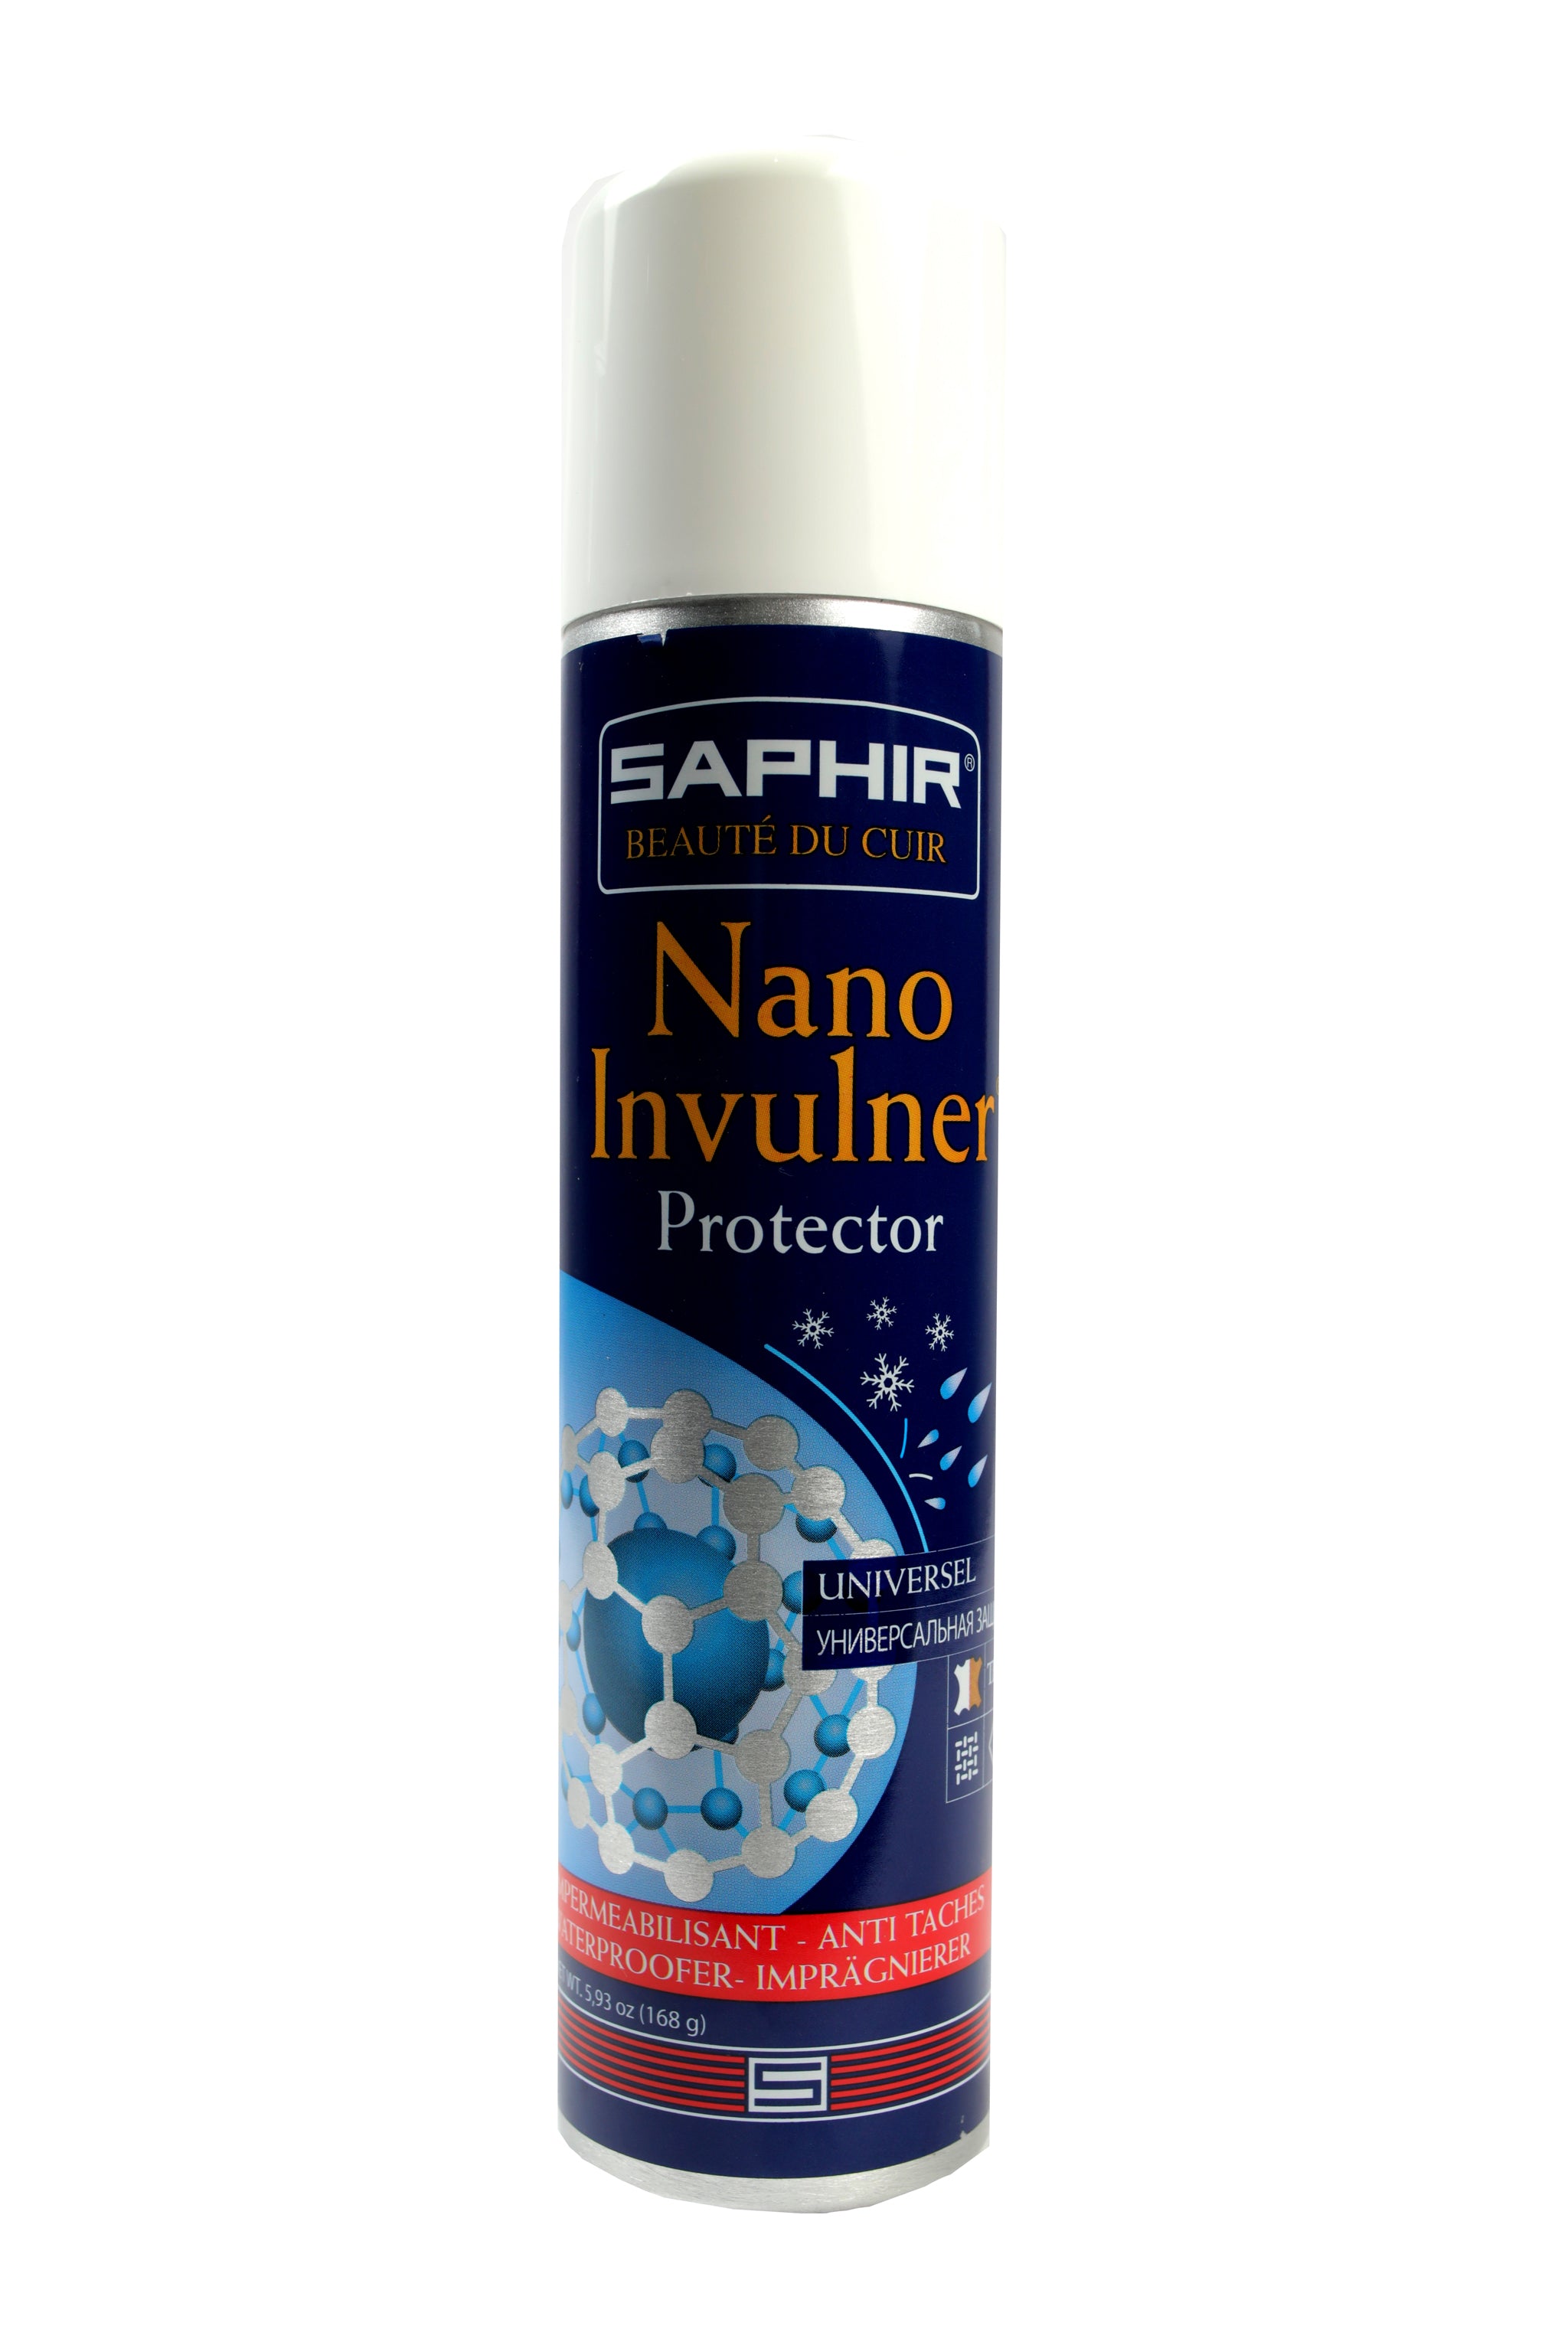 Saphir Nano Invulner Waterproofing Spray 250ml (Natural)